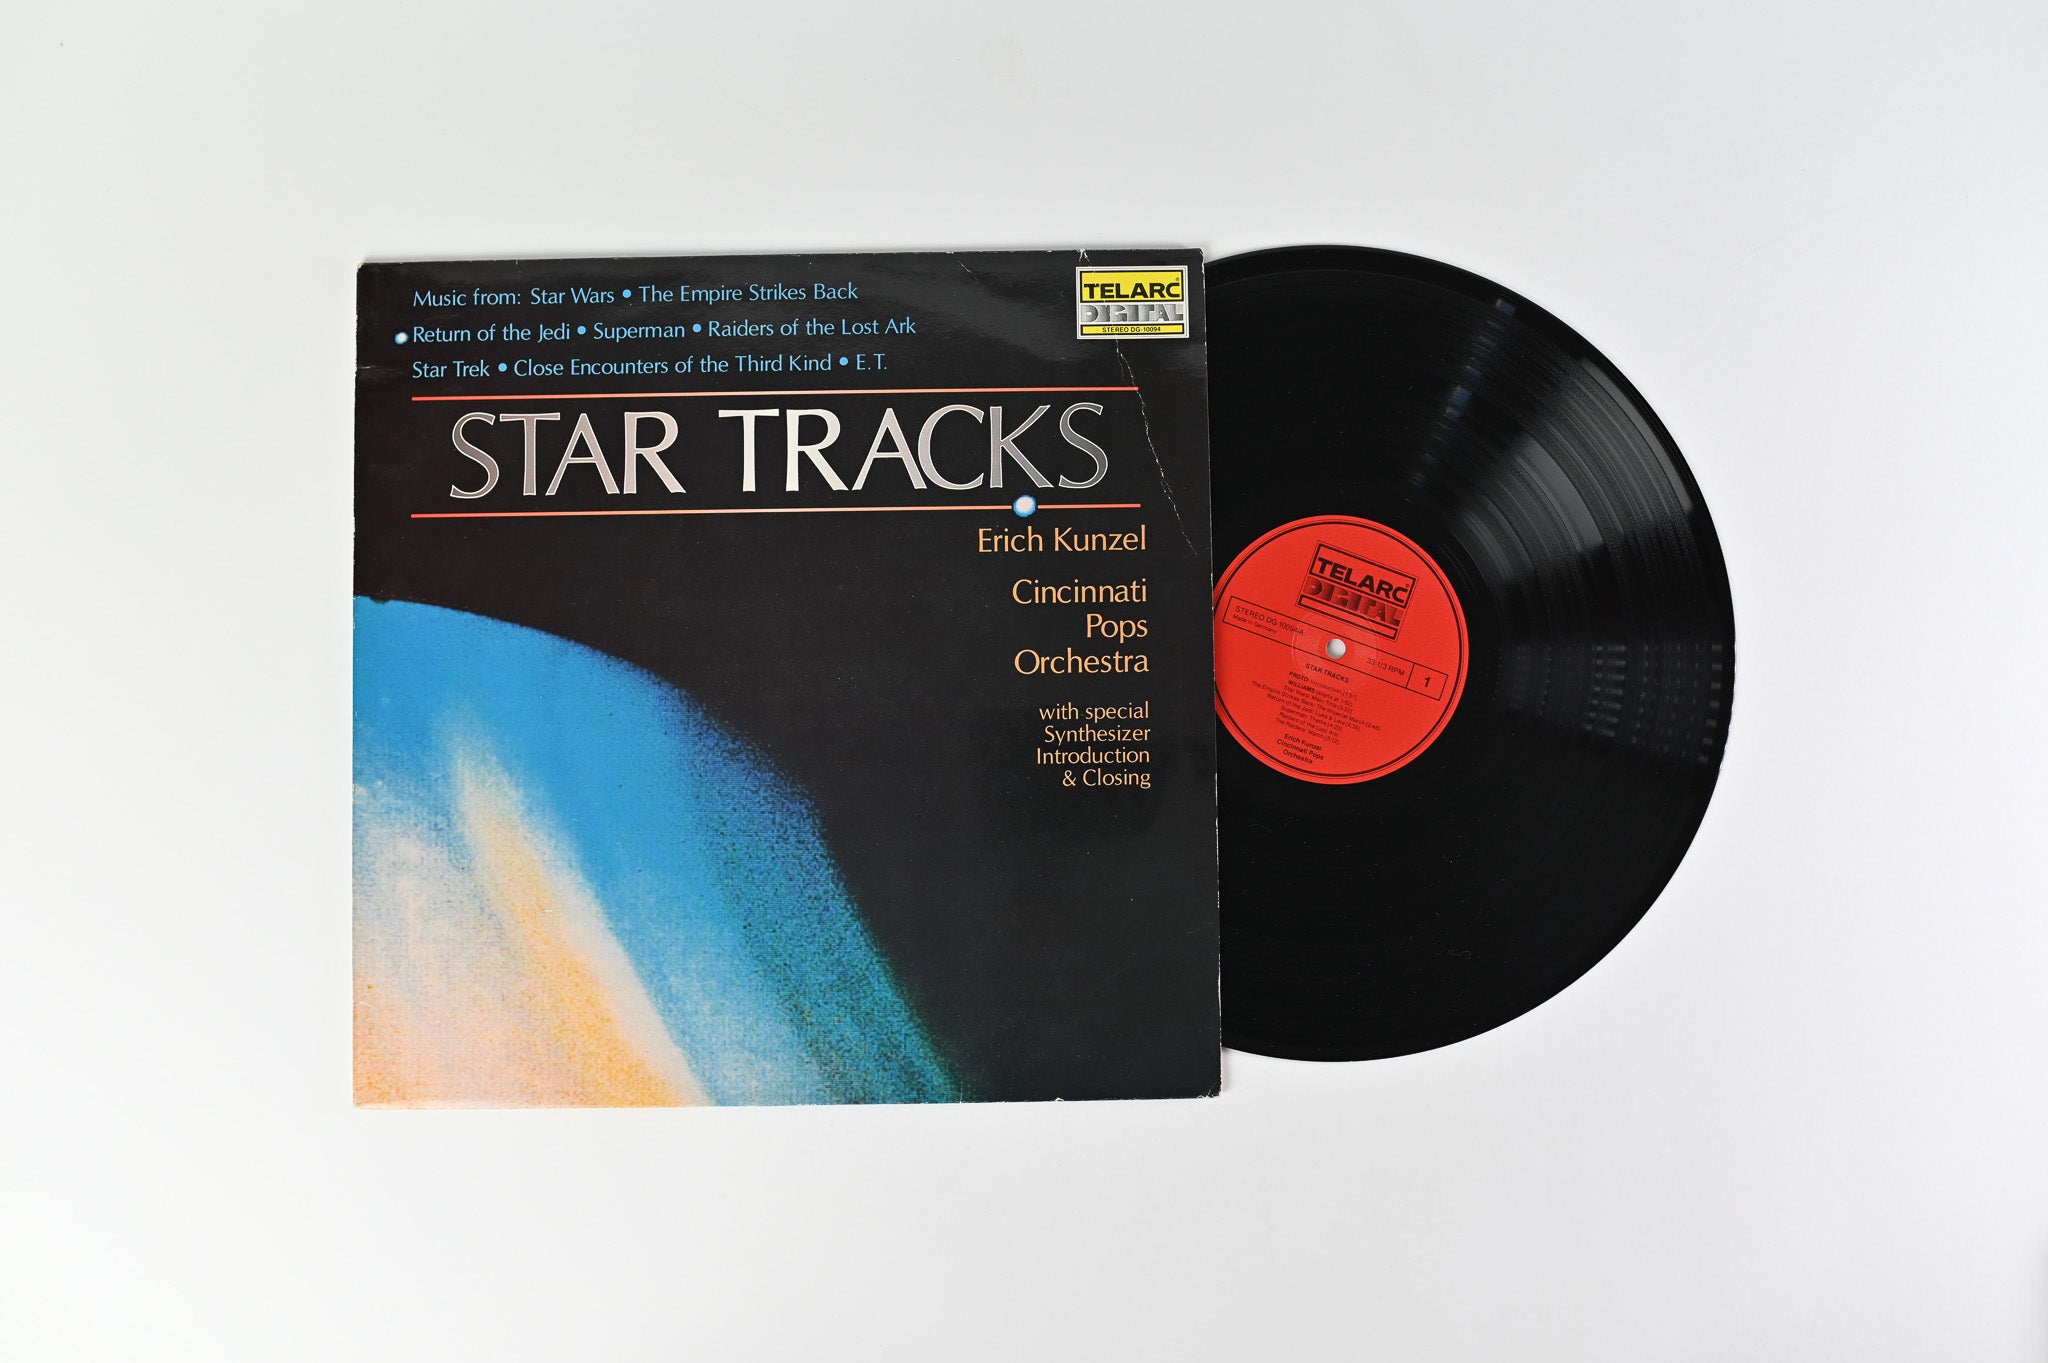 Erich Kunzel - Star Tracks on Telarc